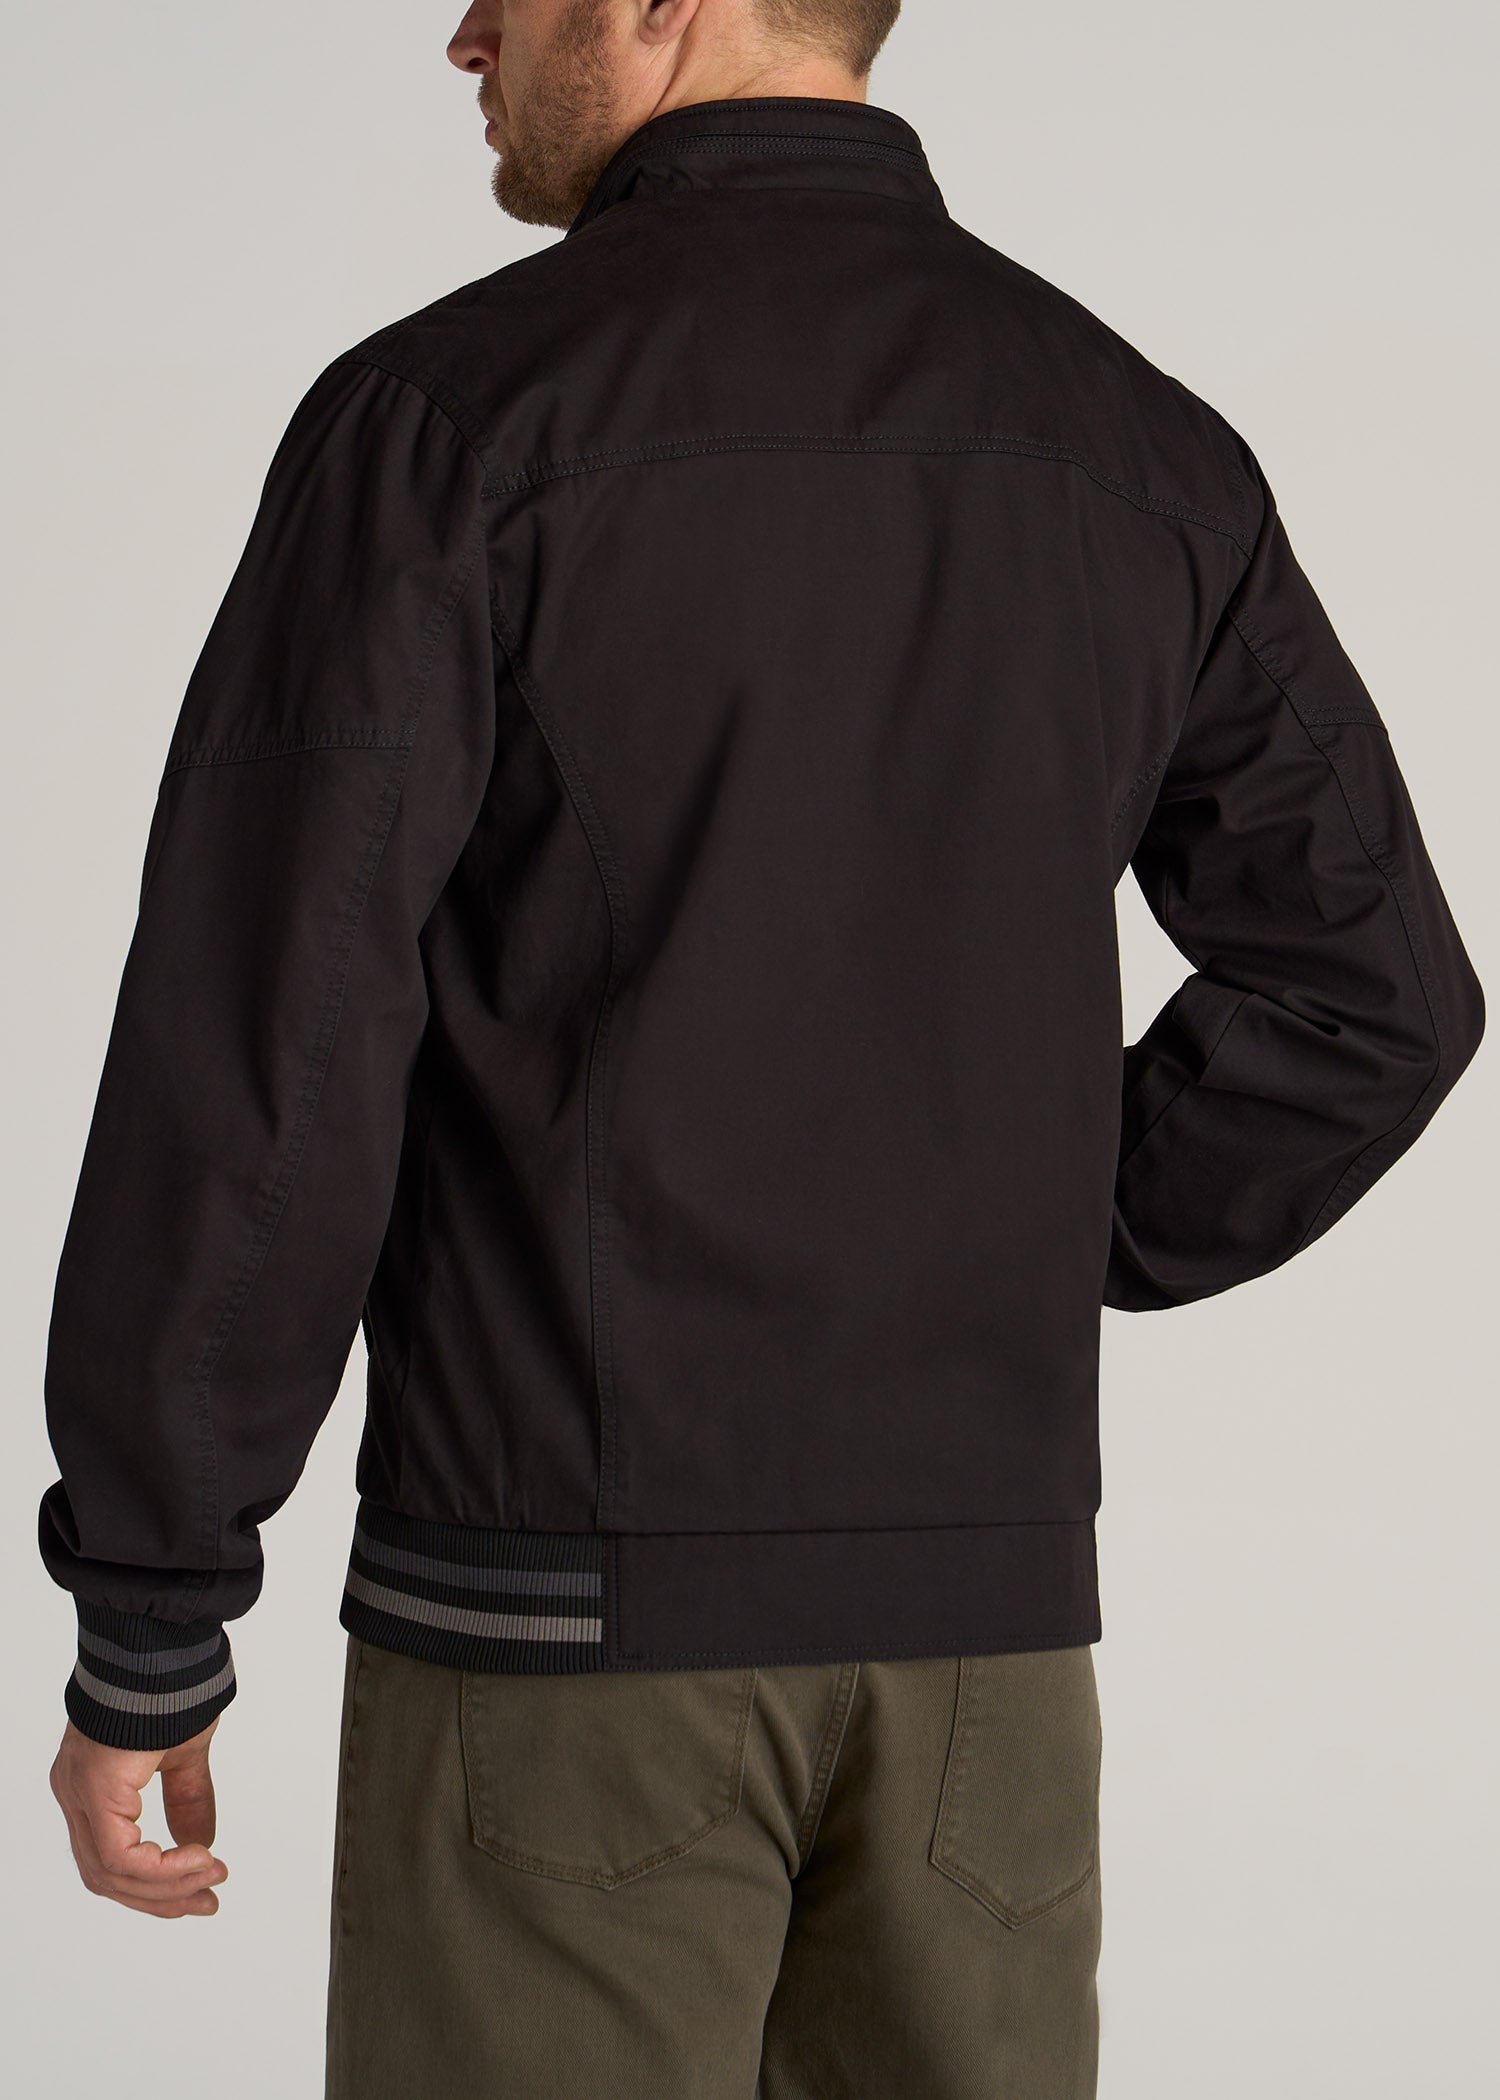 Louis Vuitton Graphic Cotton Bomber Jacket Anise. Size 56